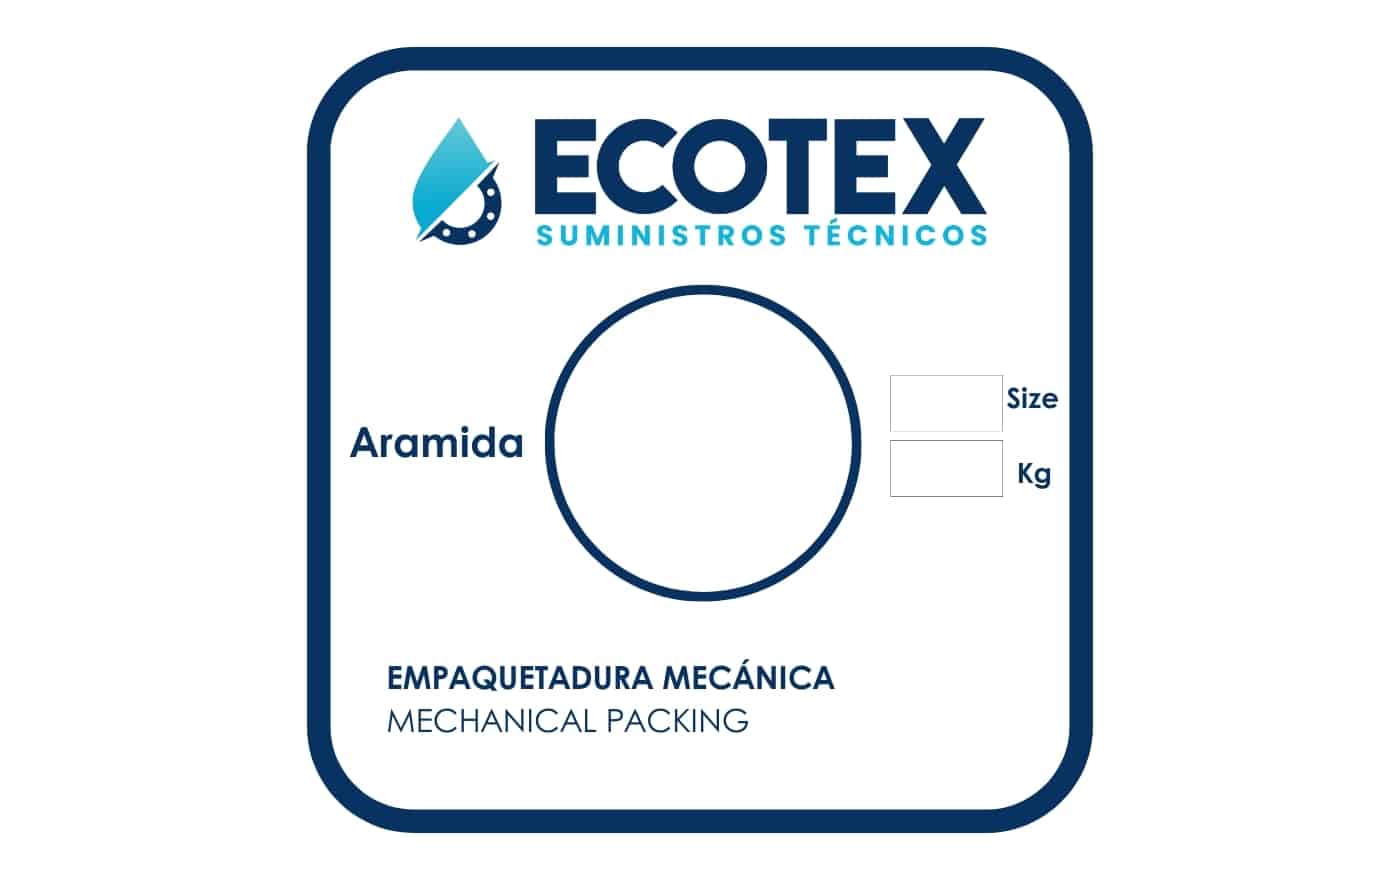 ECOTEX Aramida